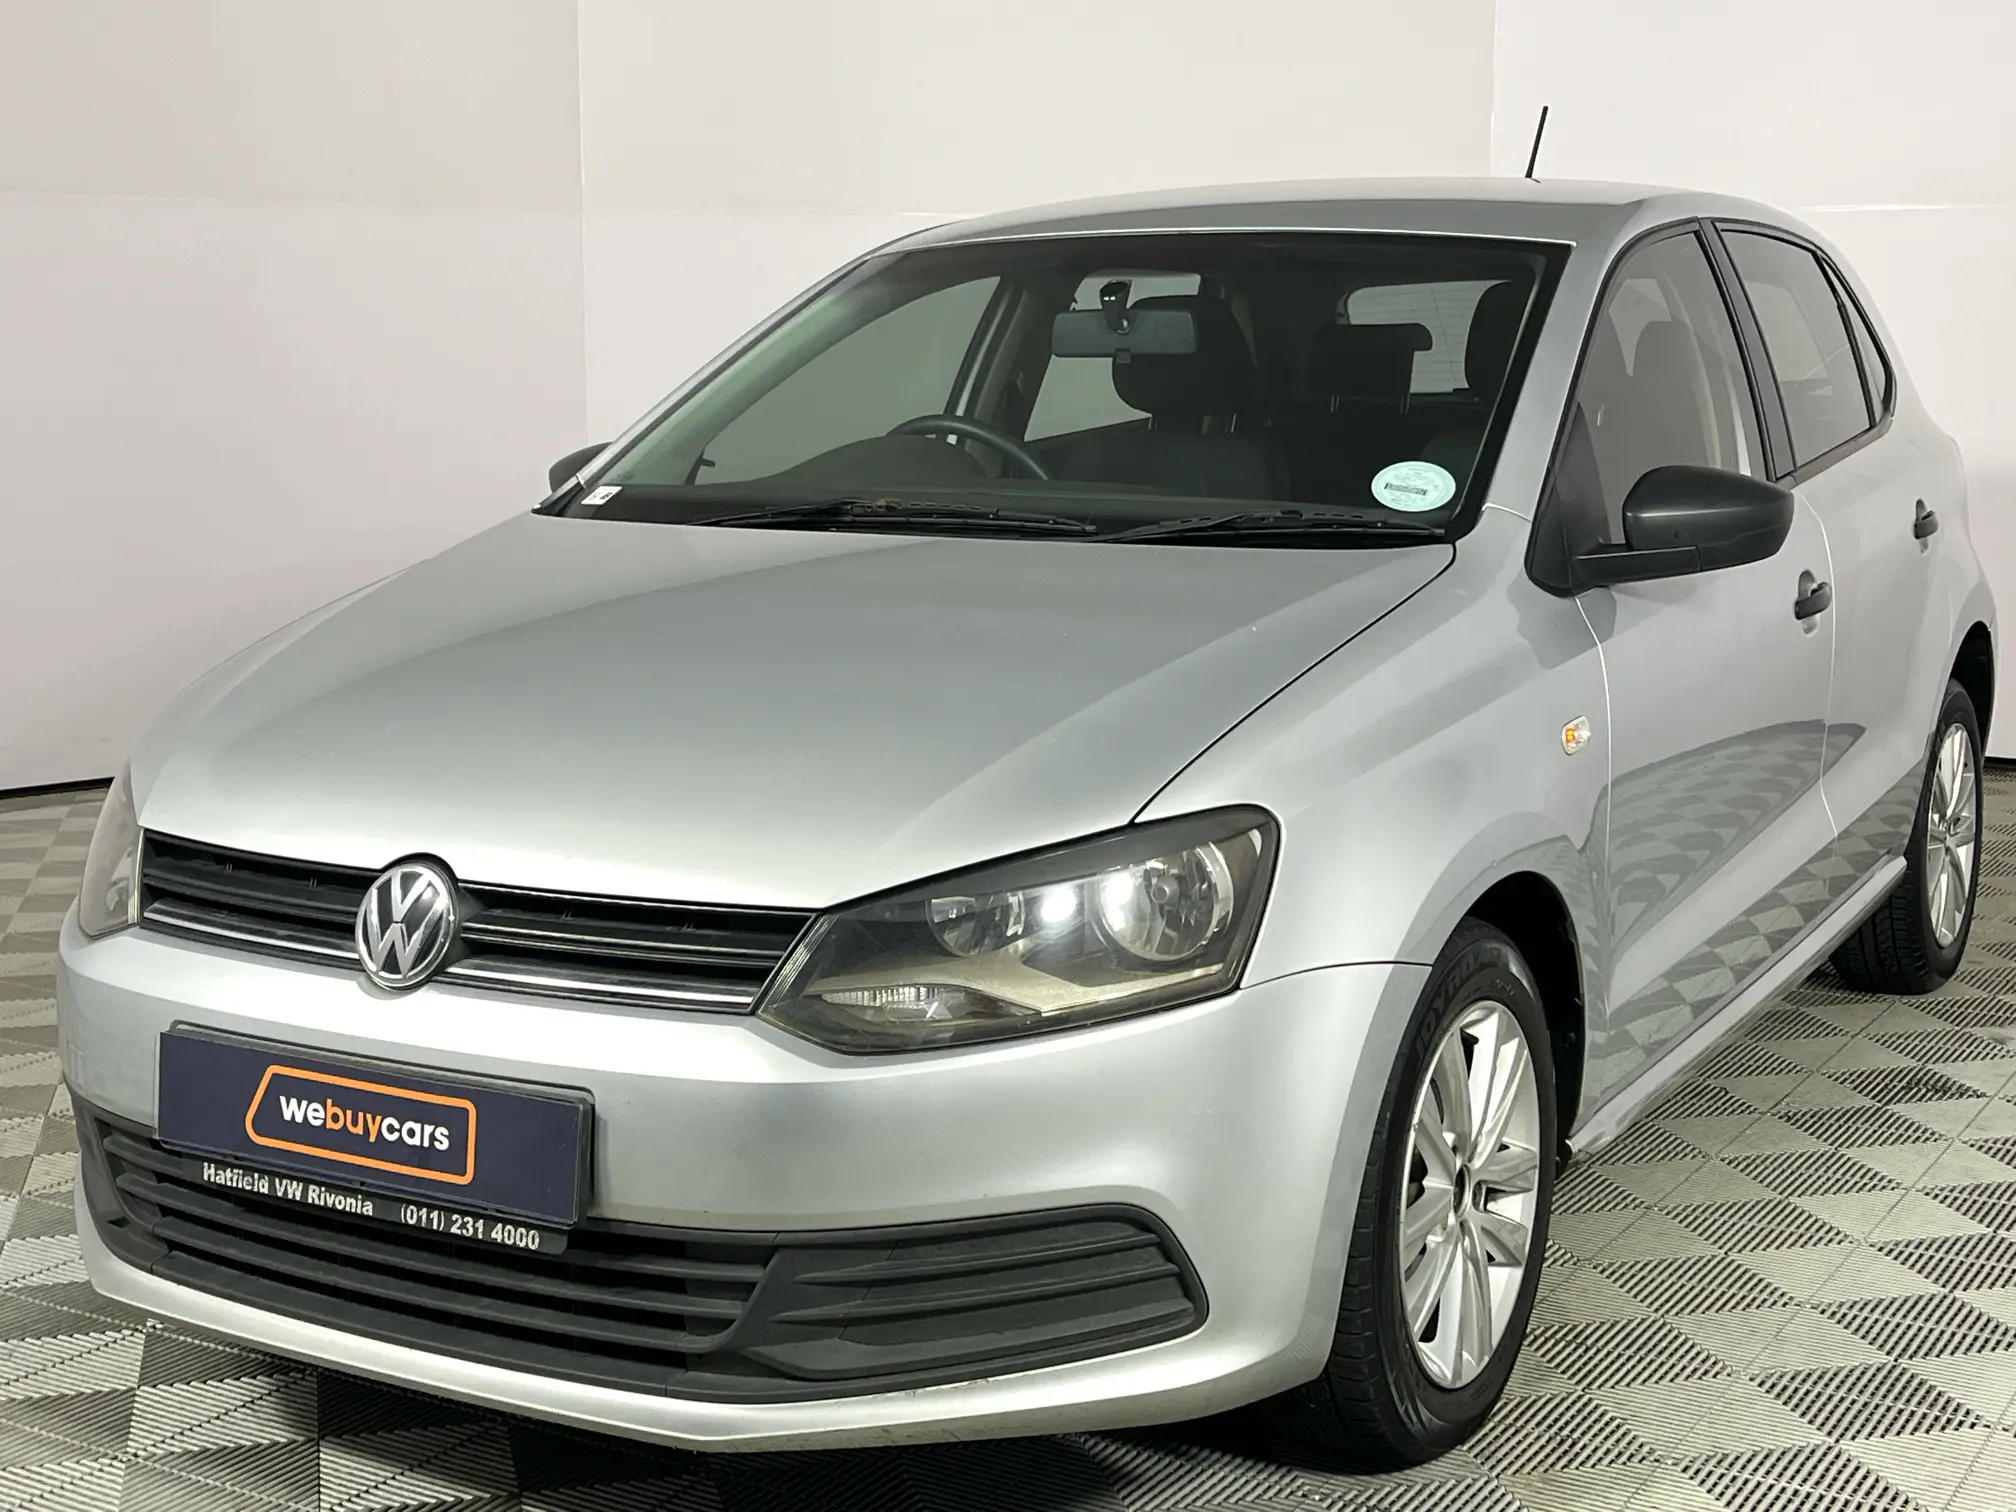 2020 Volkswagen Polo Vivo 1.4 Trendline (5dr)